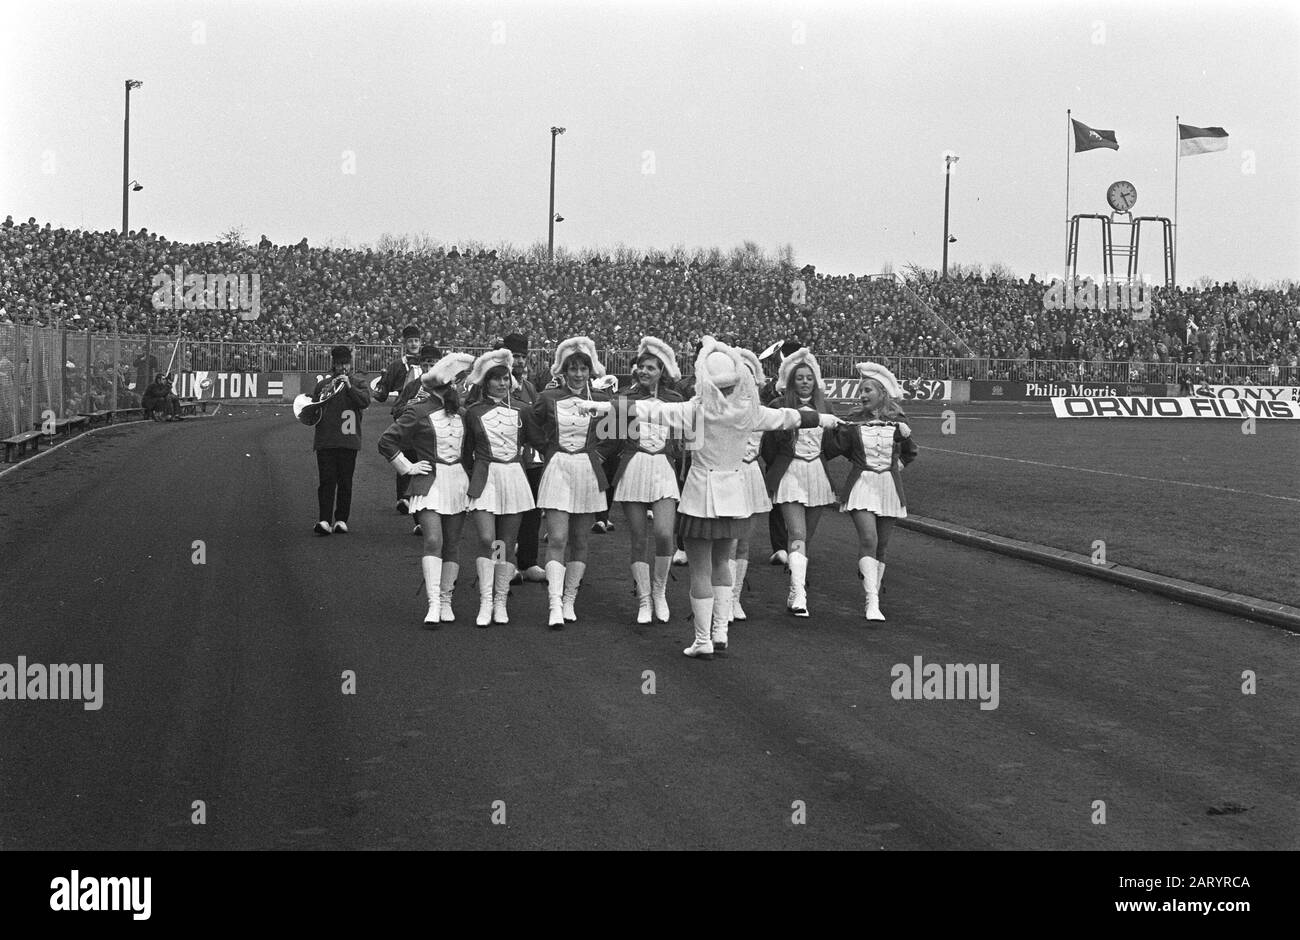 Twente against PSV 2-1; majorettes in stadium Date: February 28, 1971 Keywords: MAJORETTES, sport, stadiums, football Personal name: Twente Institution name: PSV Stock Photo